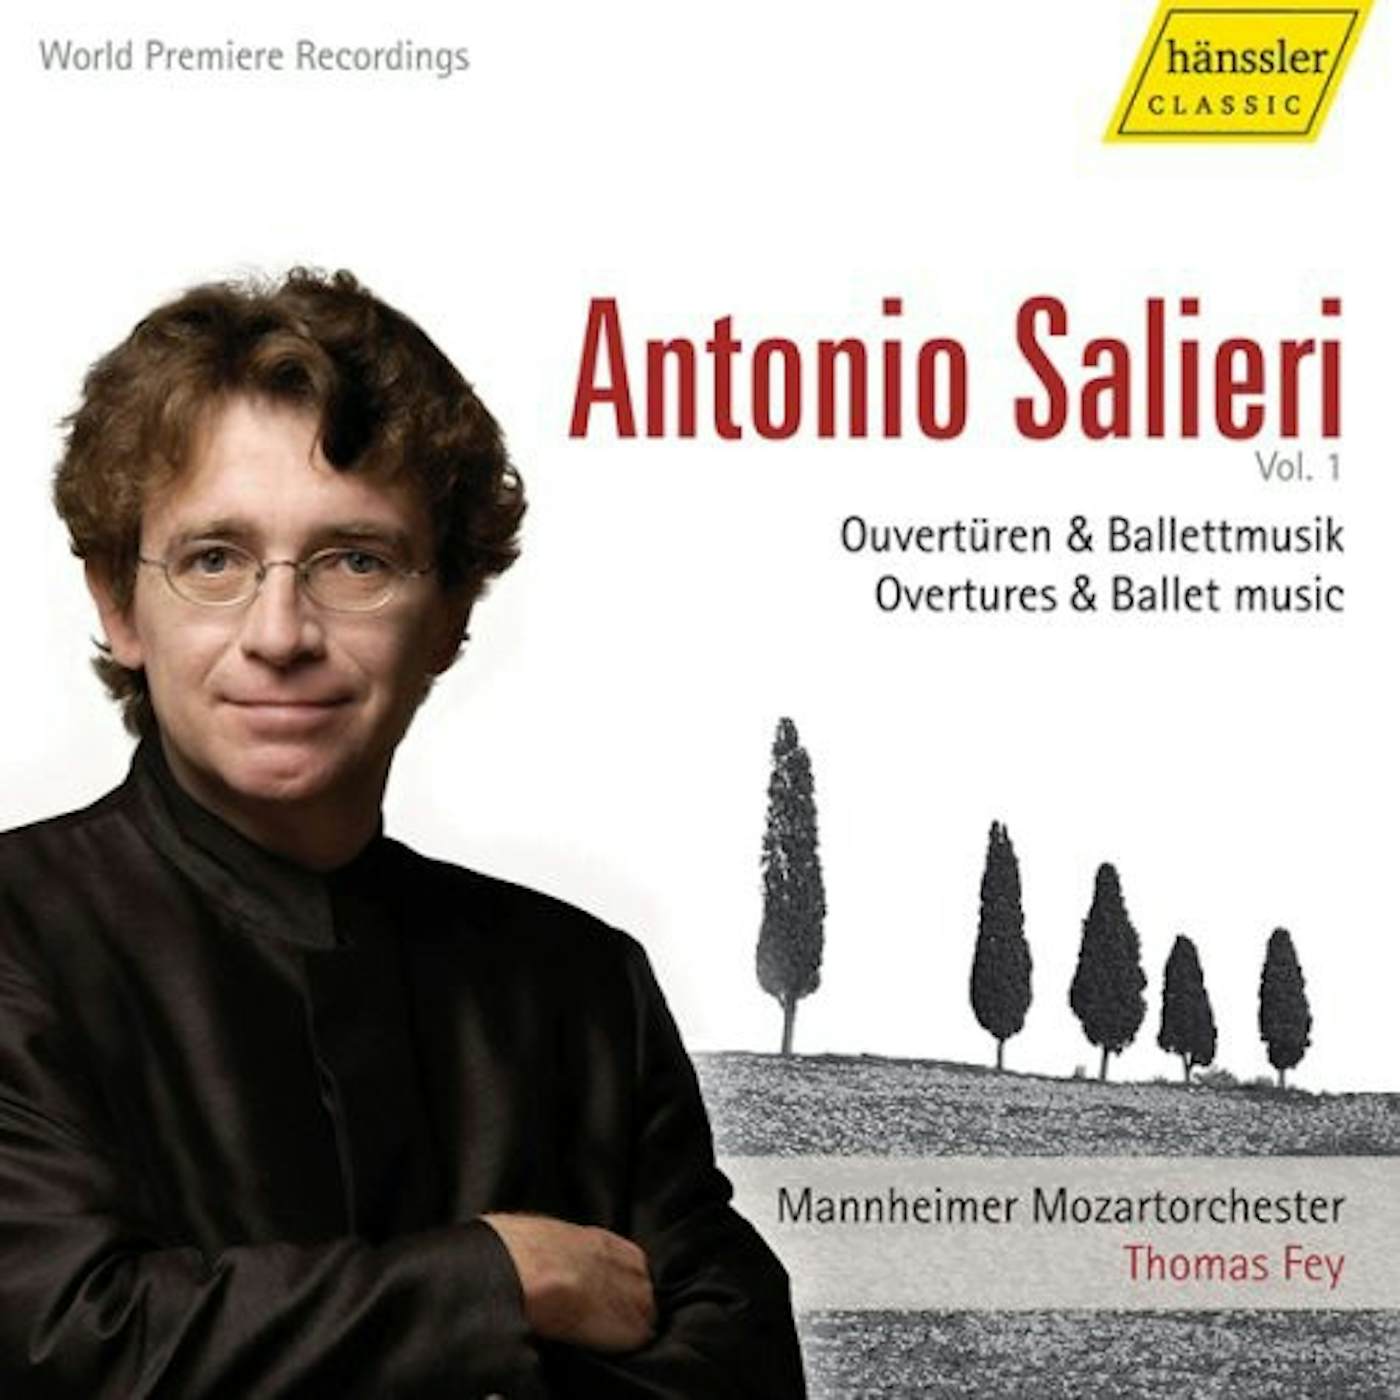 Antonio Salieri OVERTURES & BALLET MUSIC 1 CD